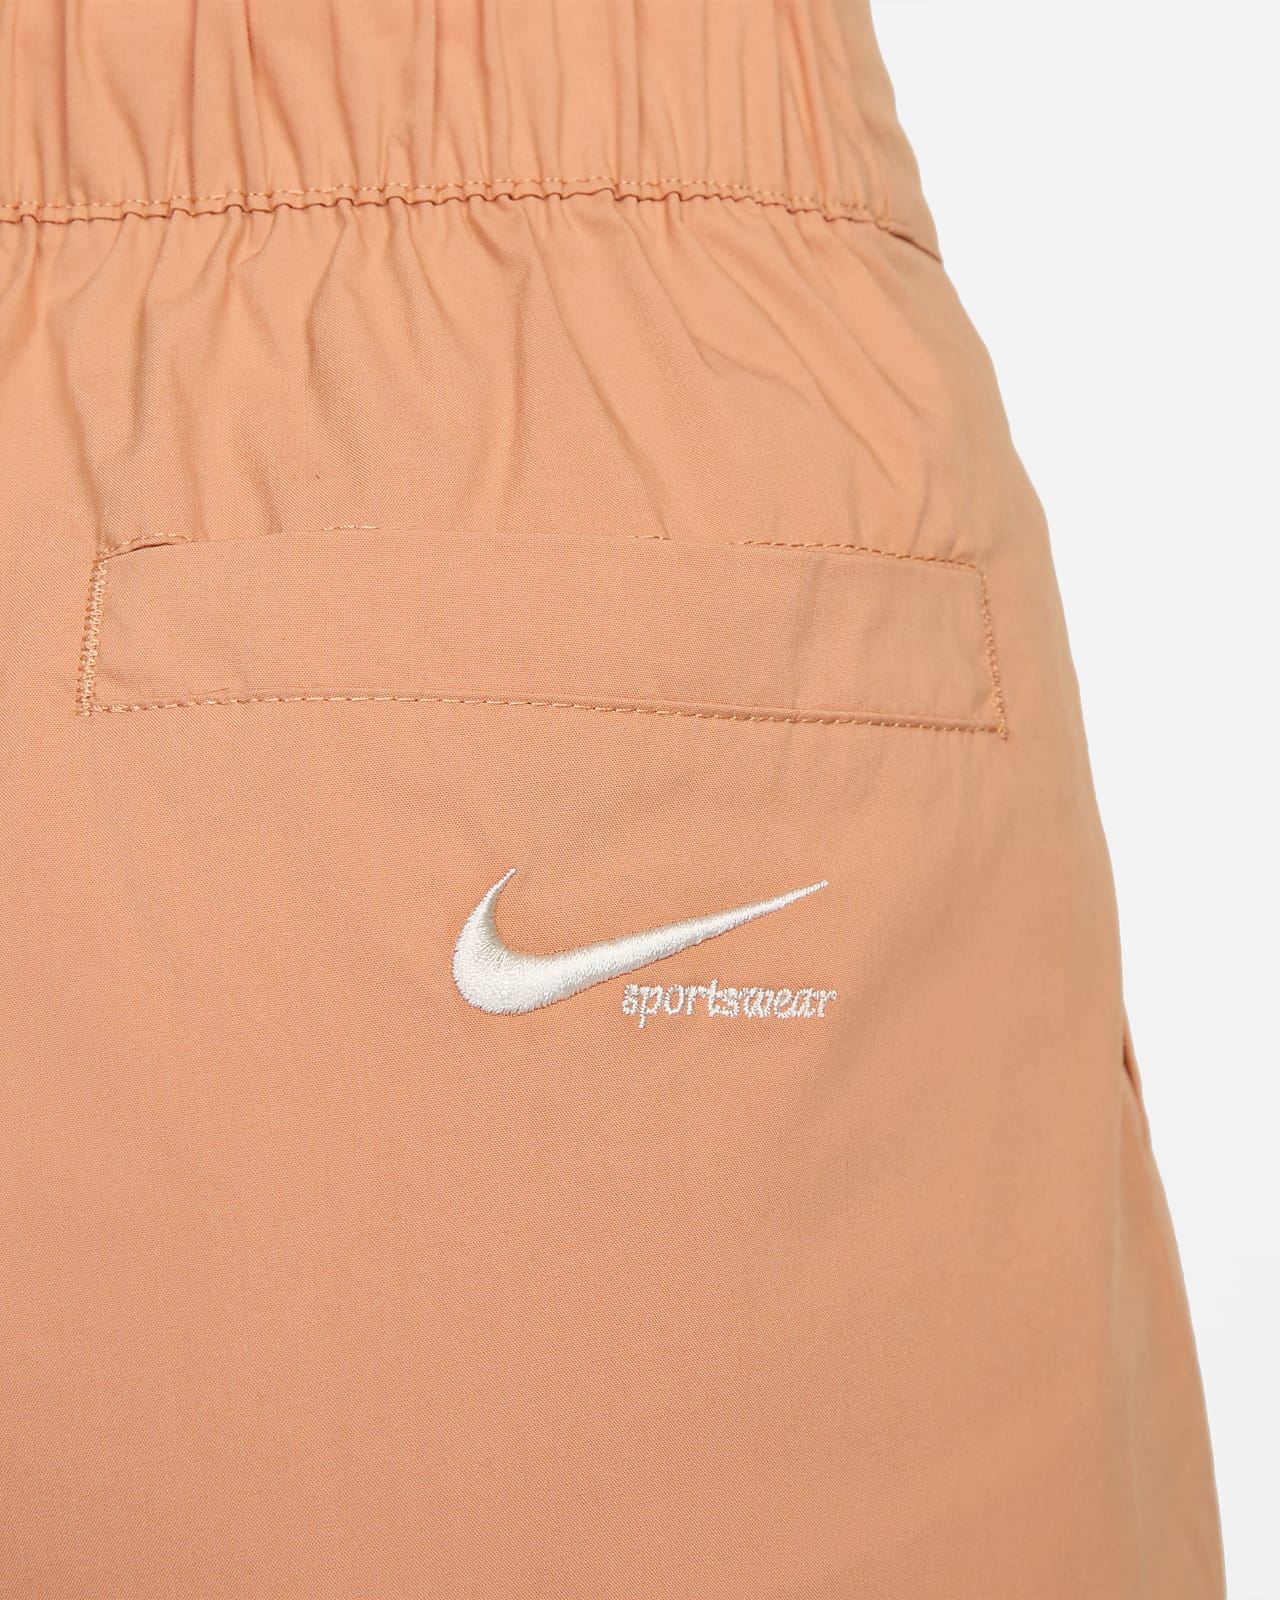 Nike Sportswear Collection Women's Woven Trouser Pants.